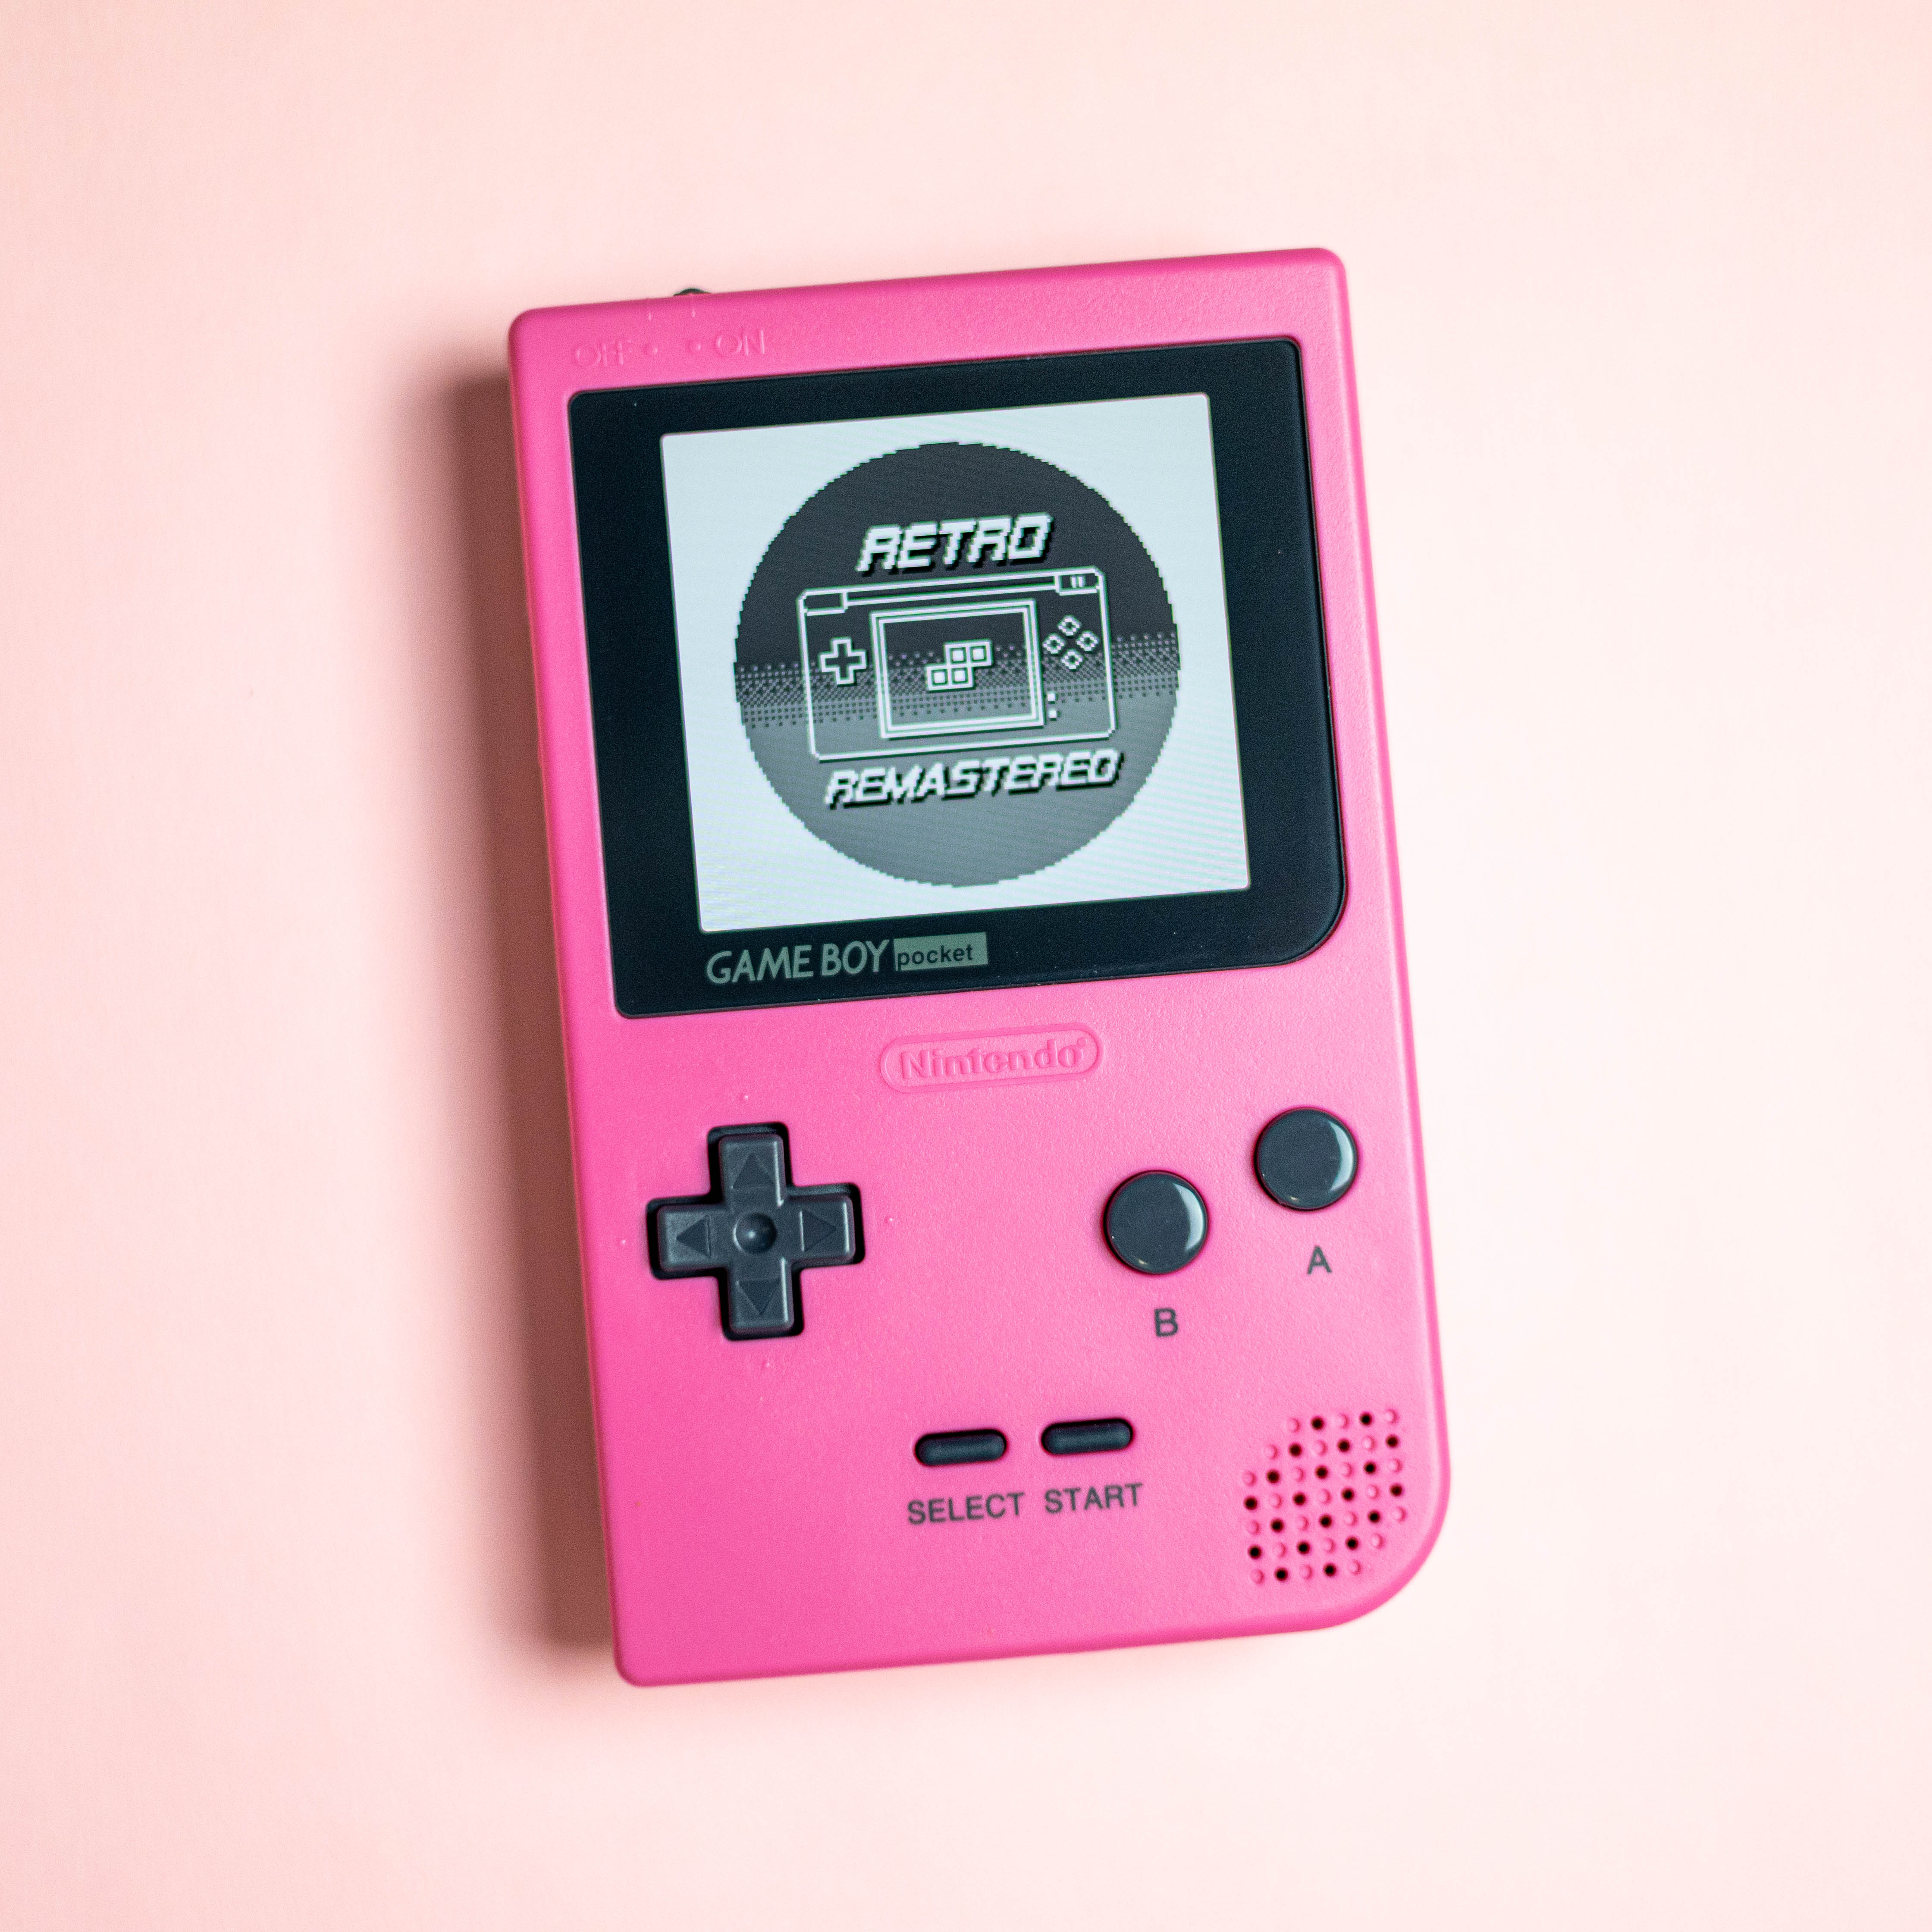 Modded Game Boy Pocket w/ IPS Display (Pink) – Retro Remastered